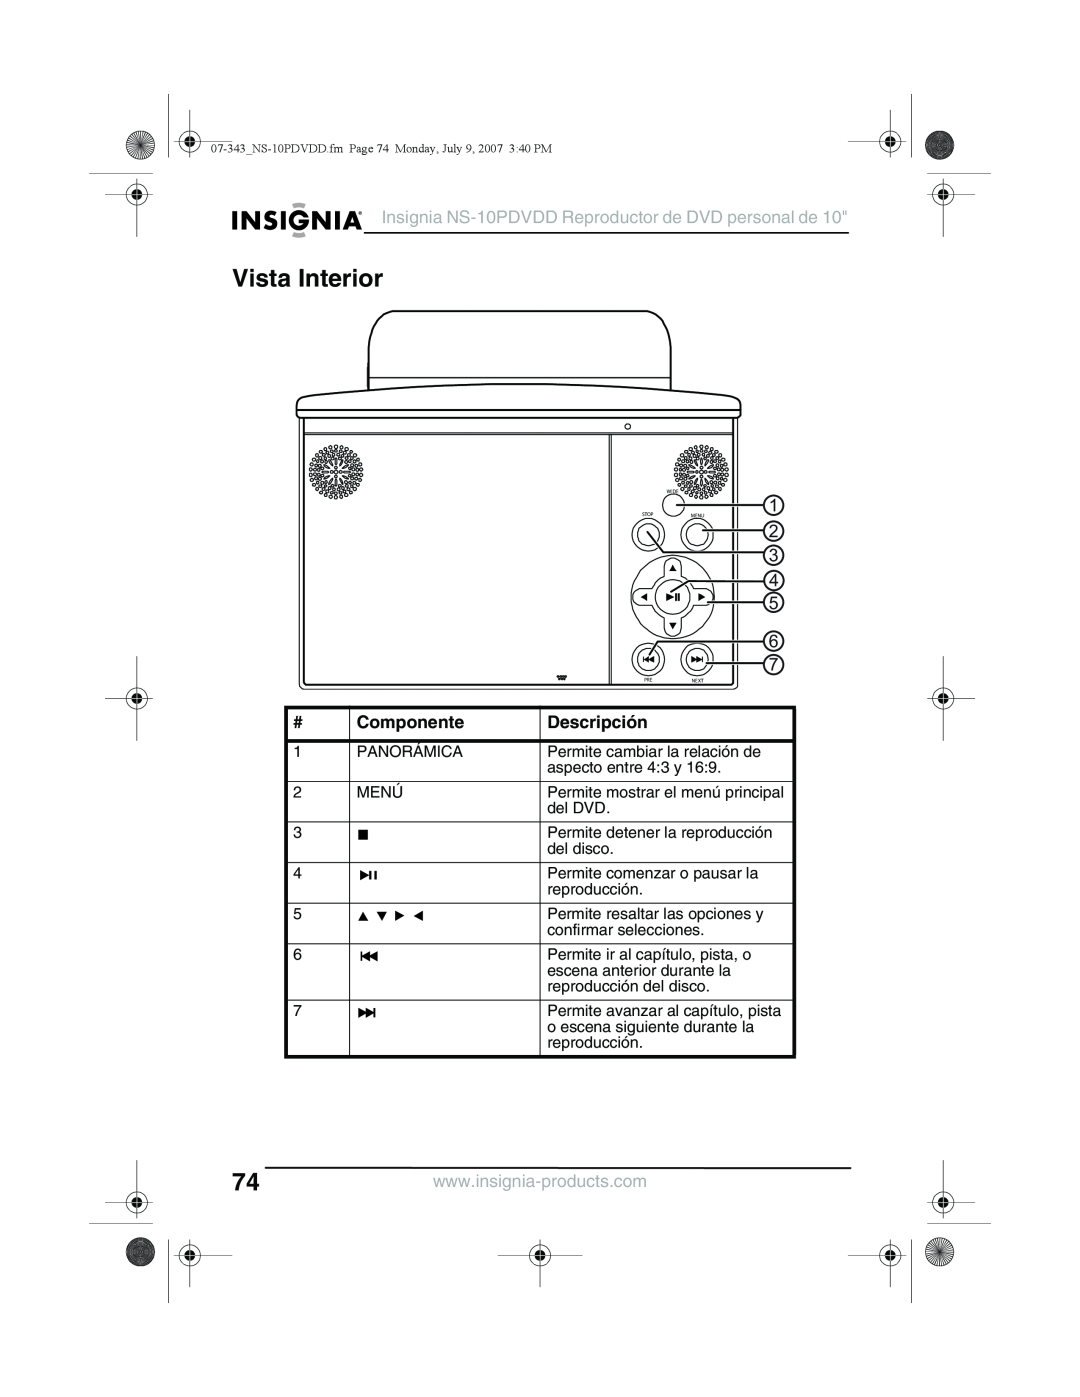 Insignia manual Vista Interior, Insignia NS-10PDVDD Reproductor de DVD personal de, Componente, Descripción 